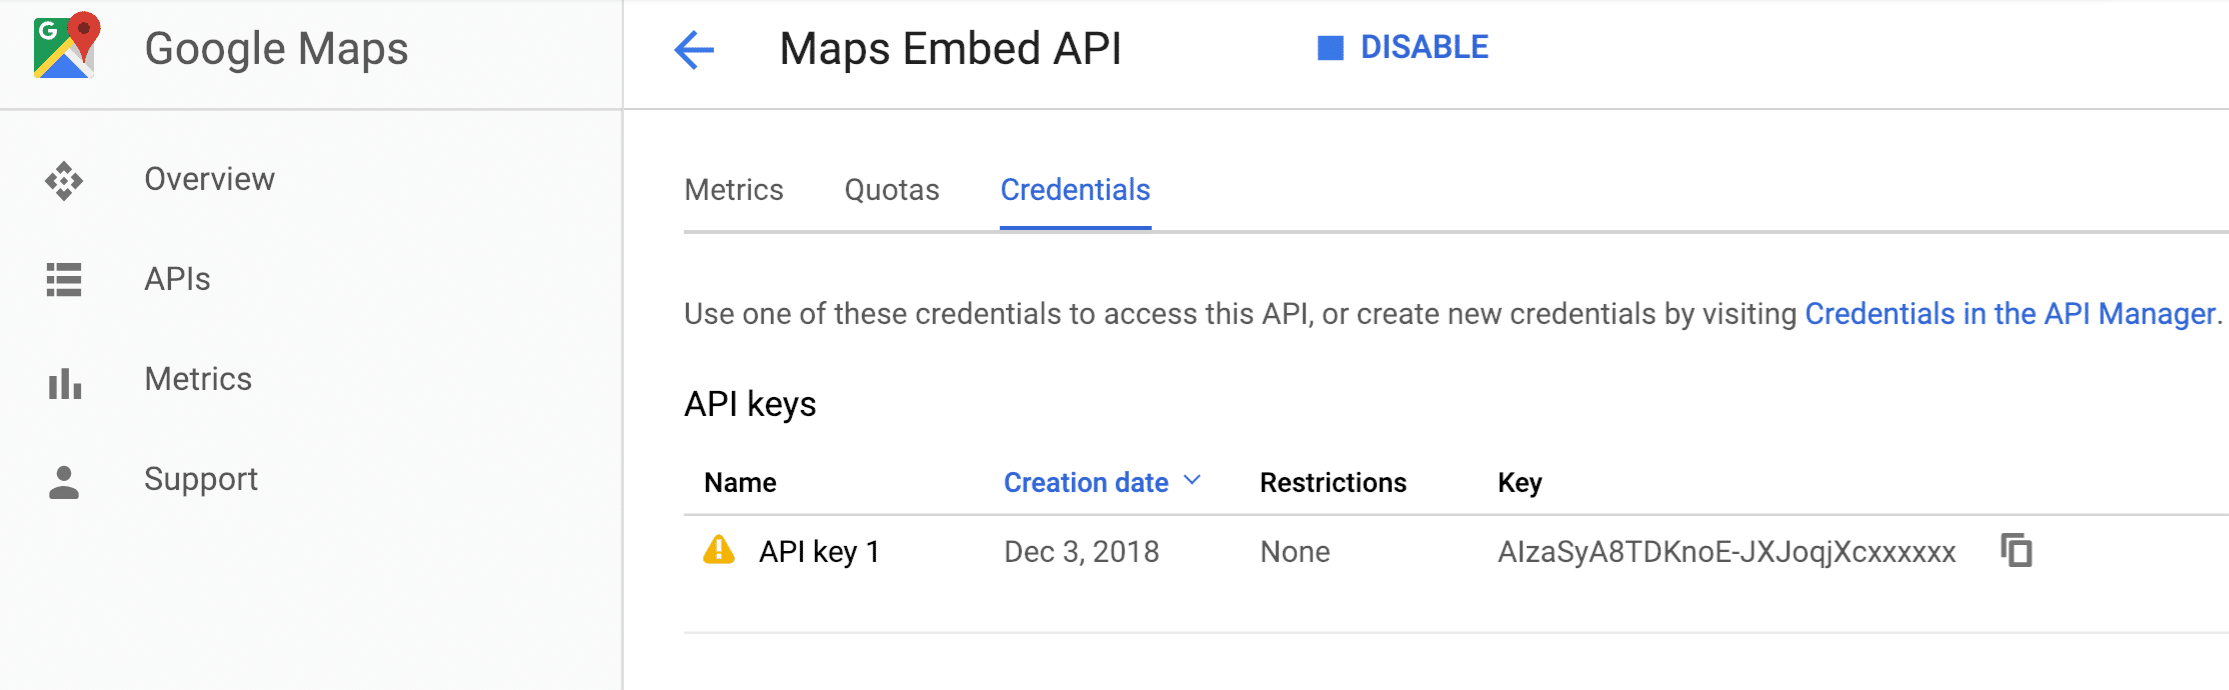 Google Maps API key